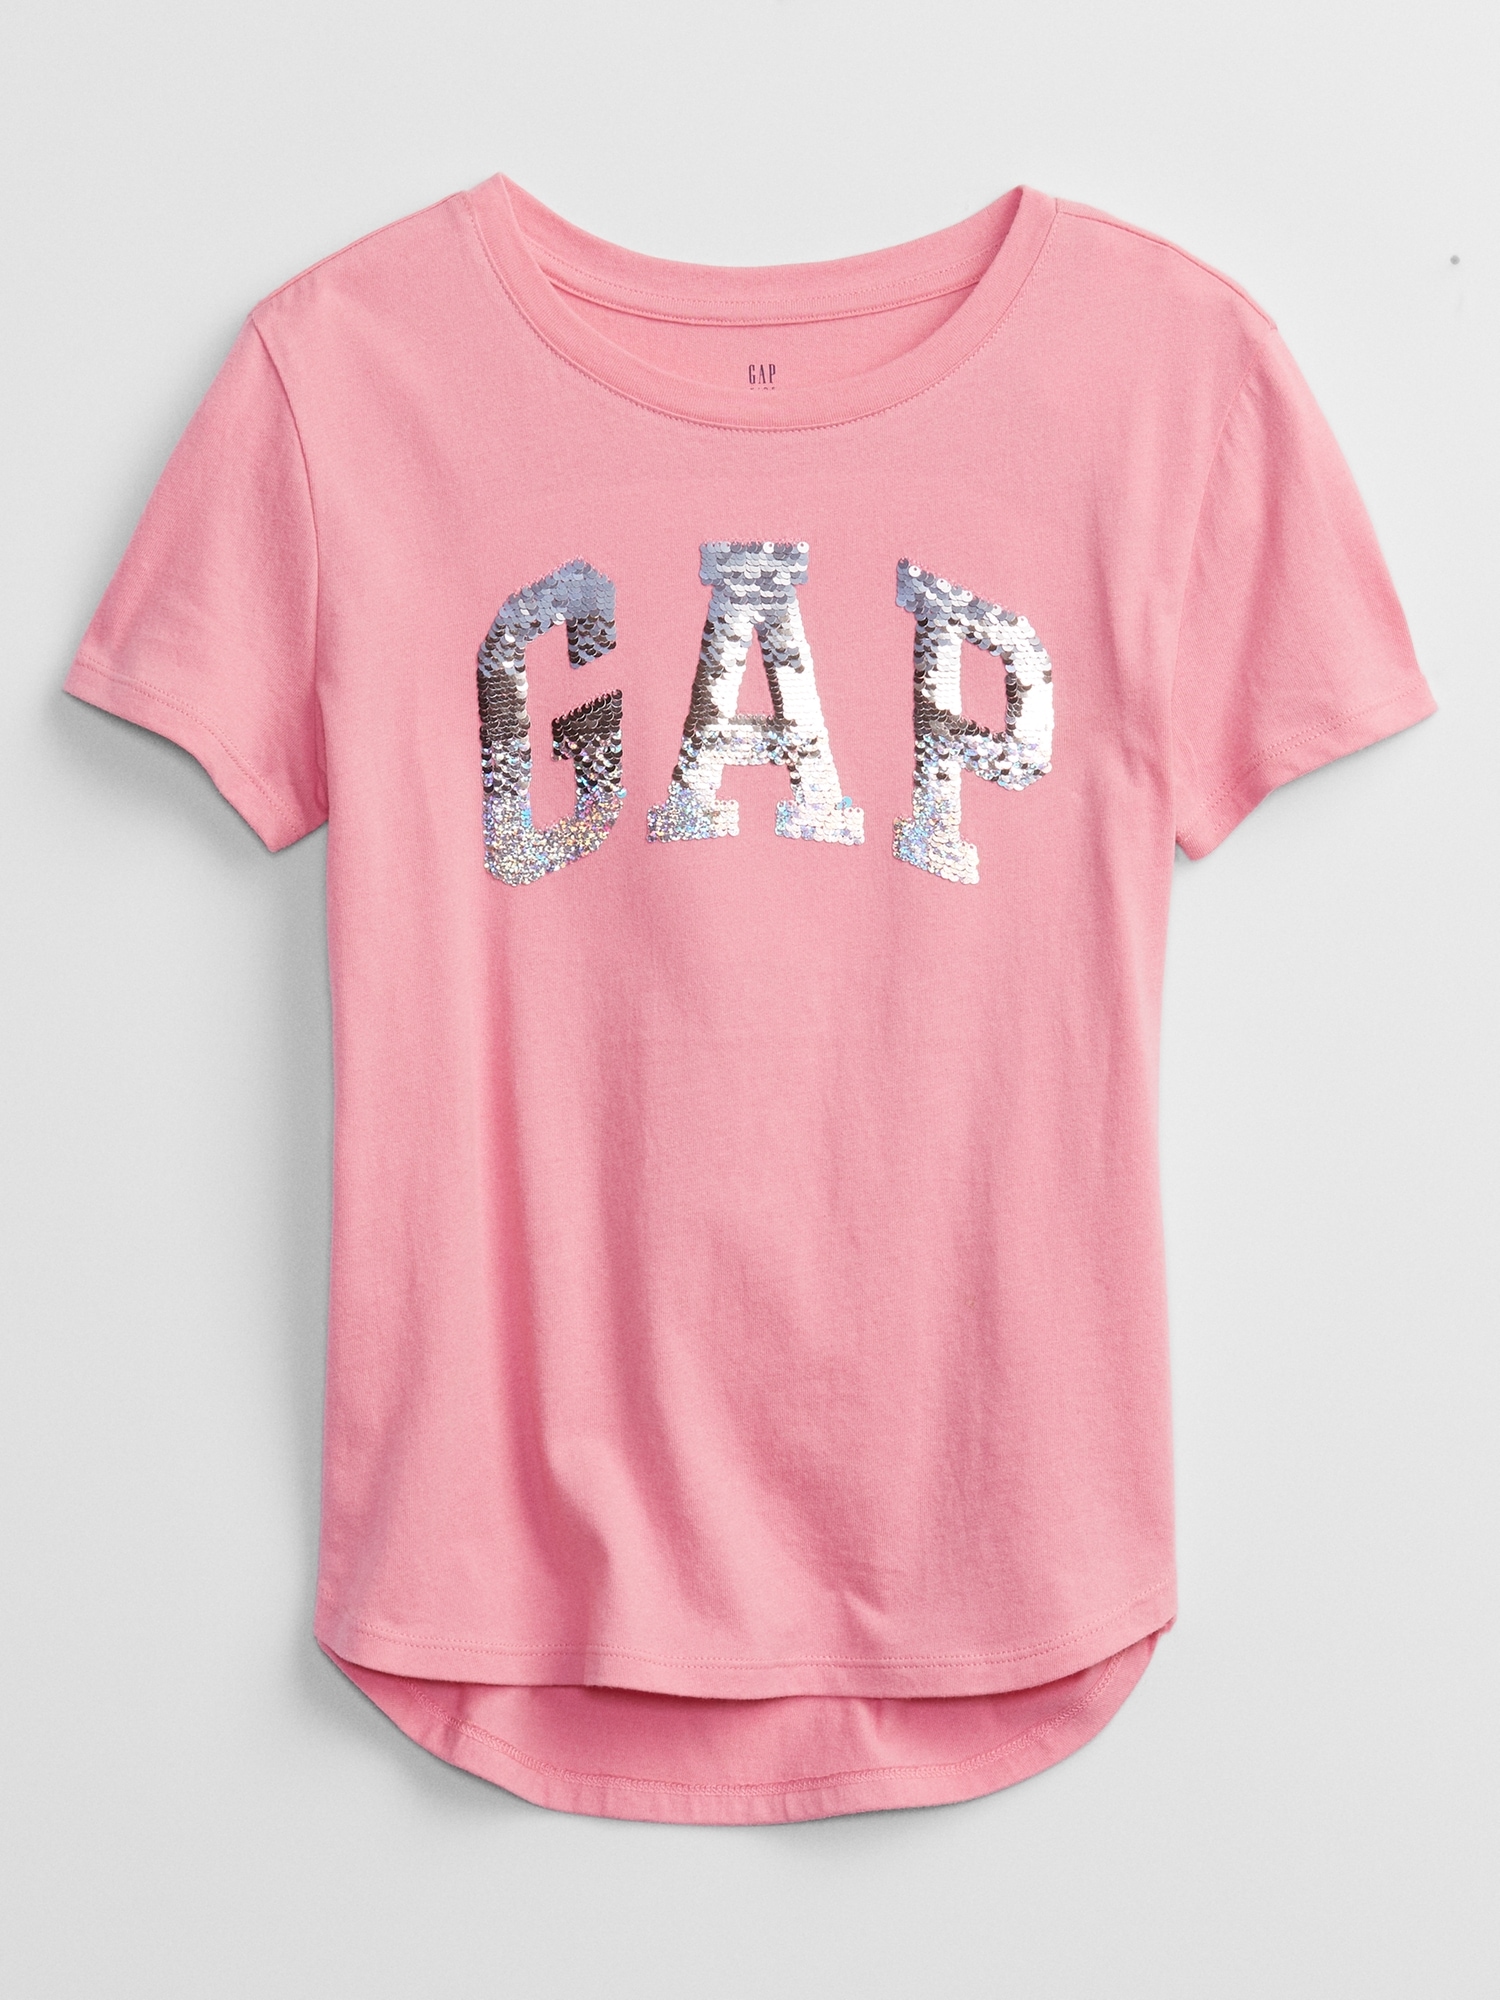 Kids Gap Logo T-Shirt | Gap Factory